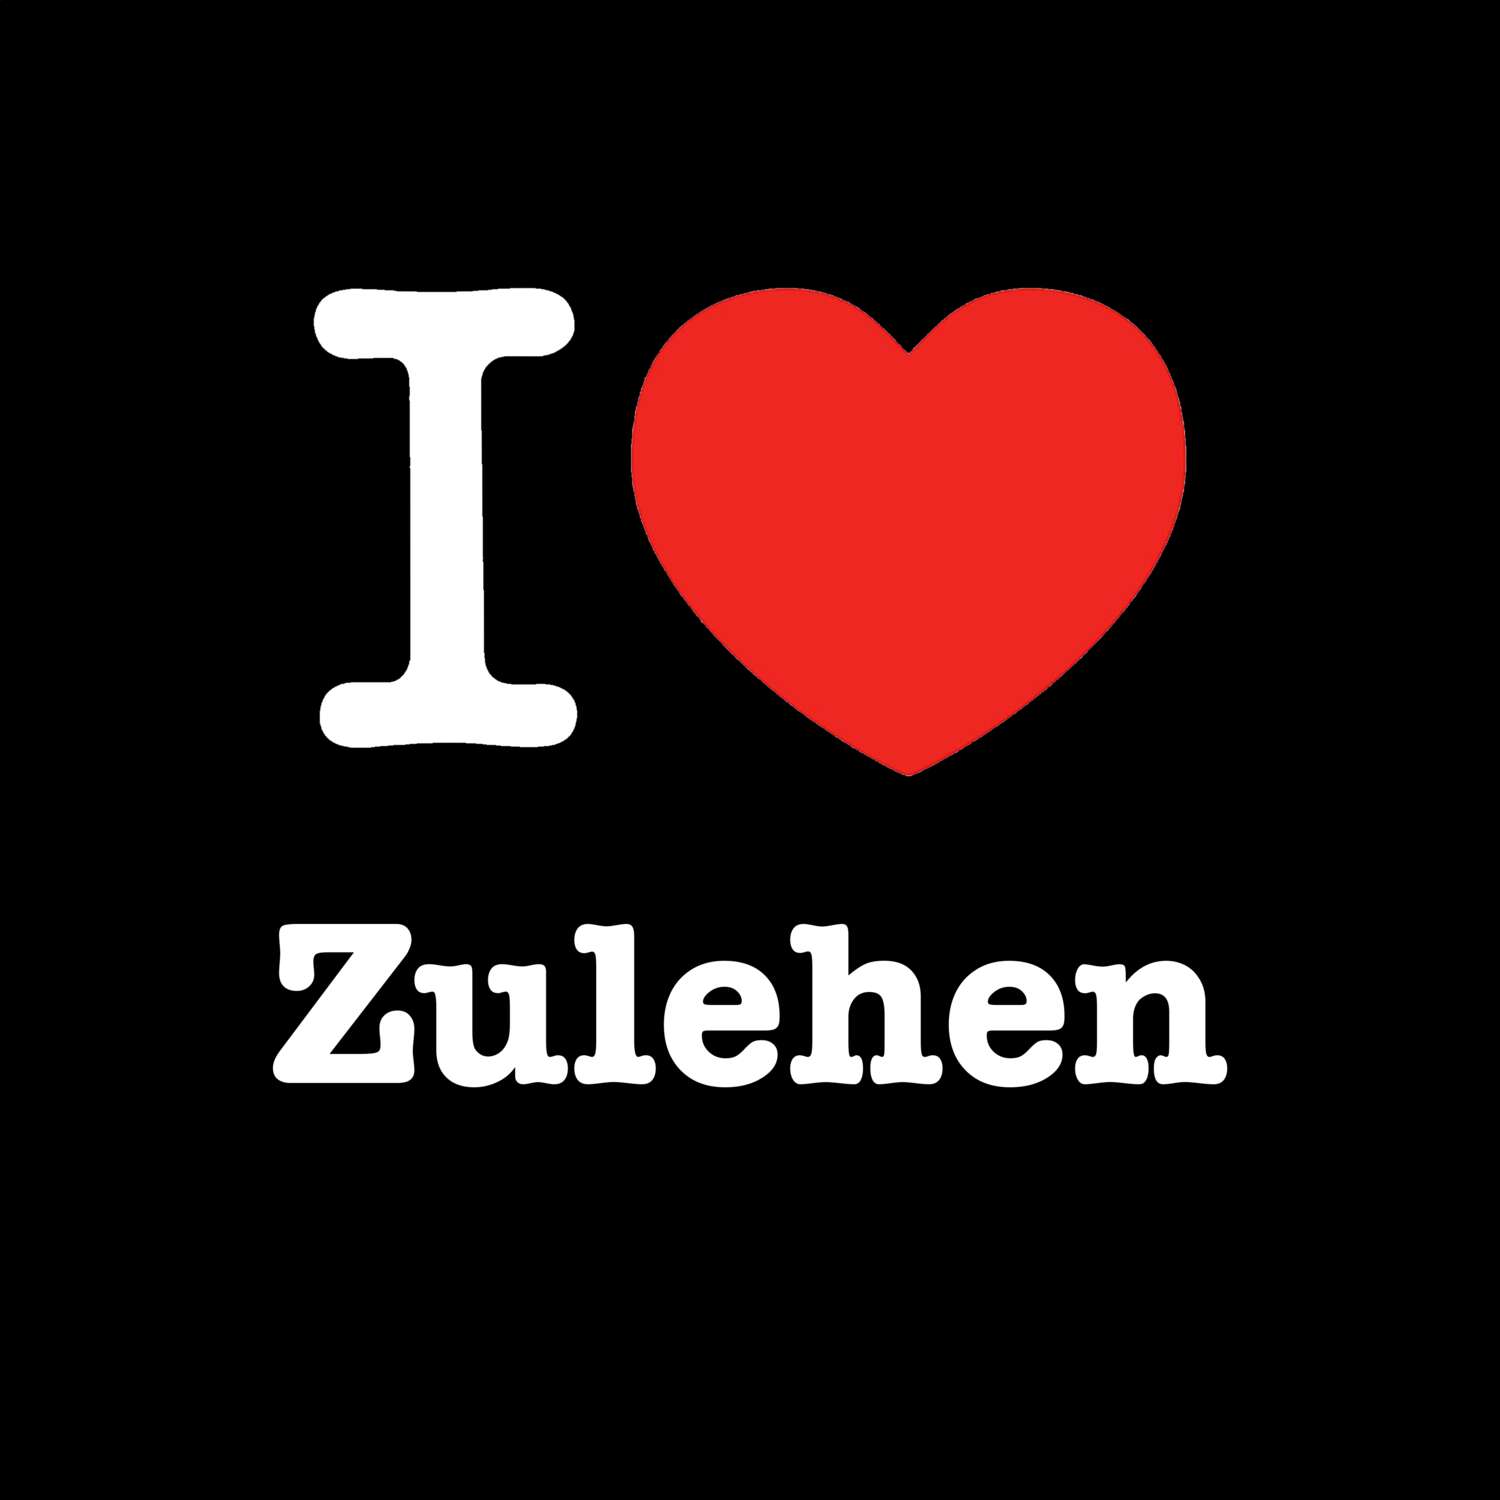 Zulehen T-Shirt »I love«